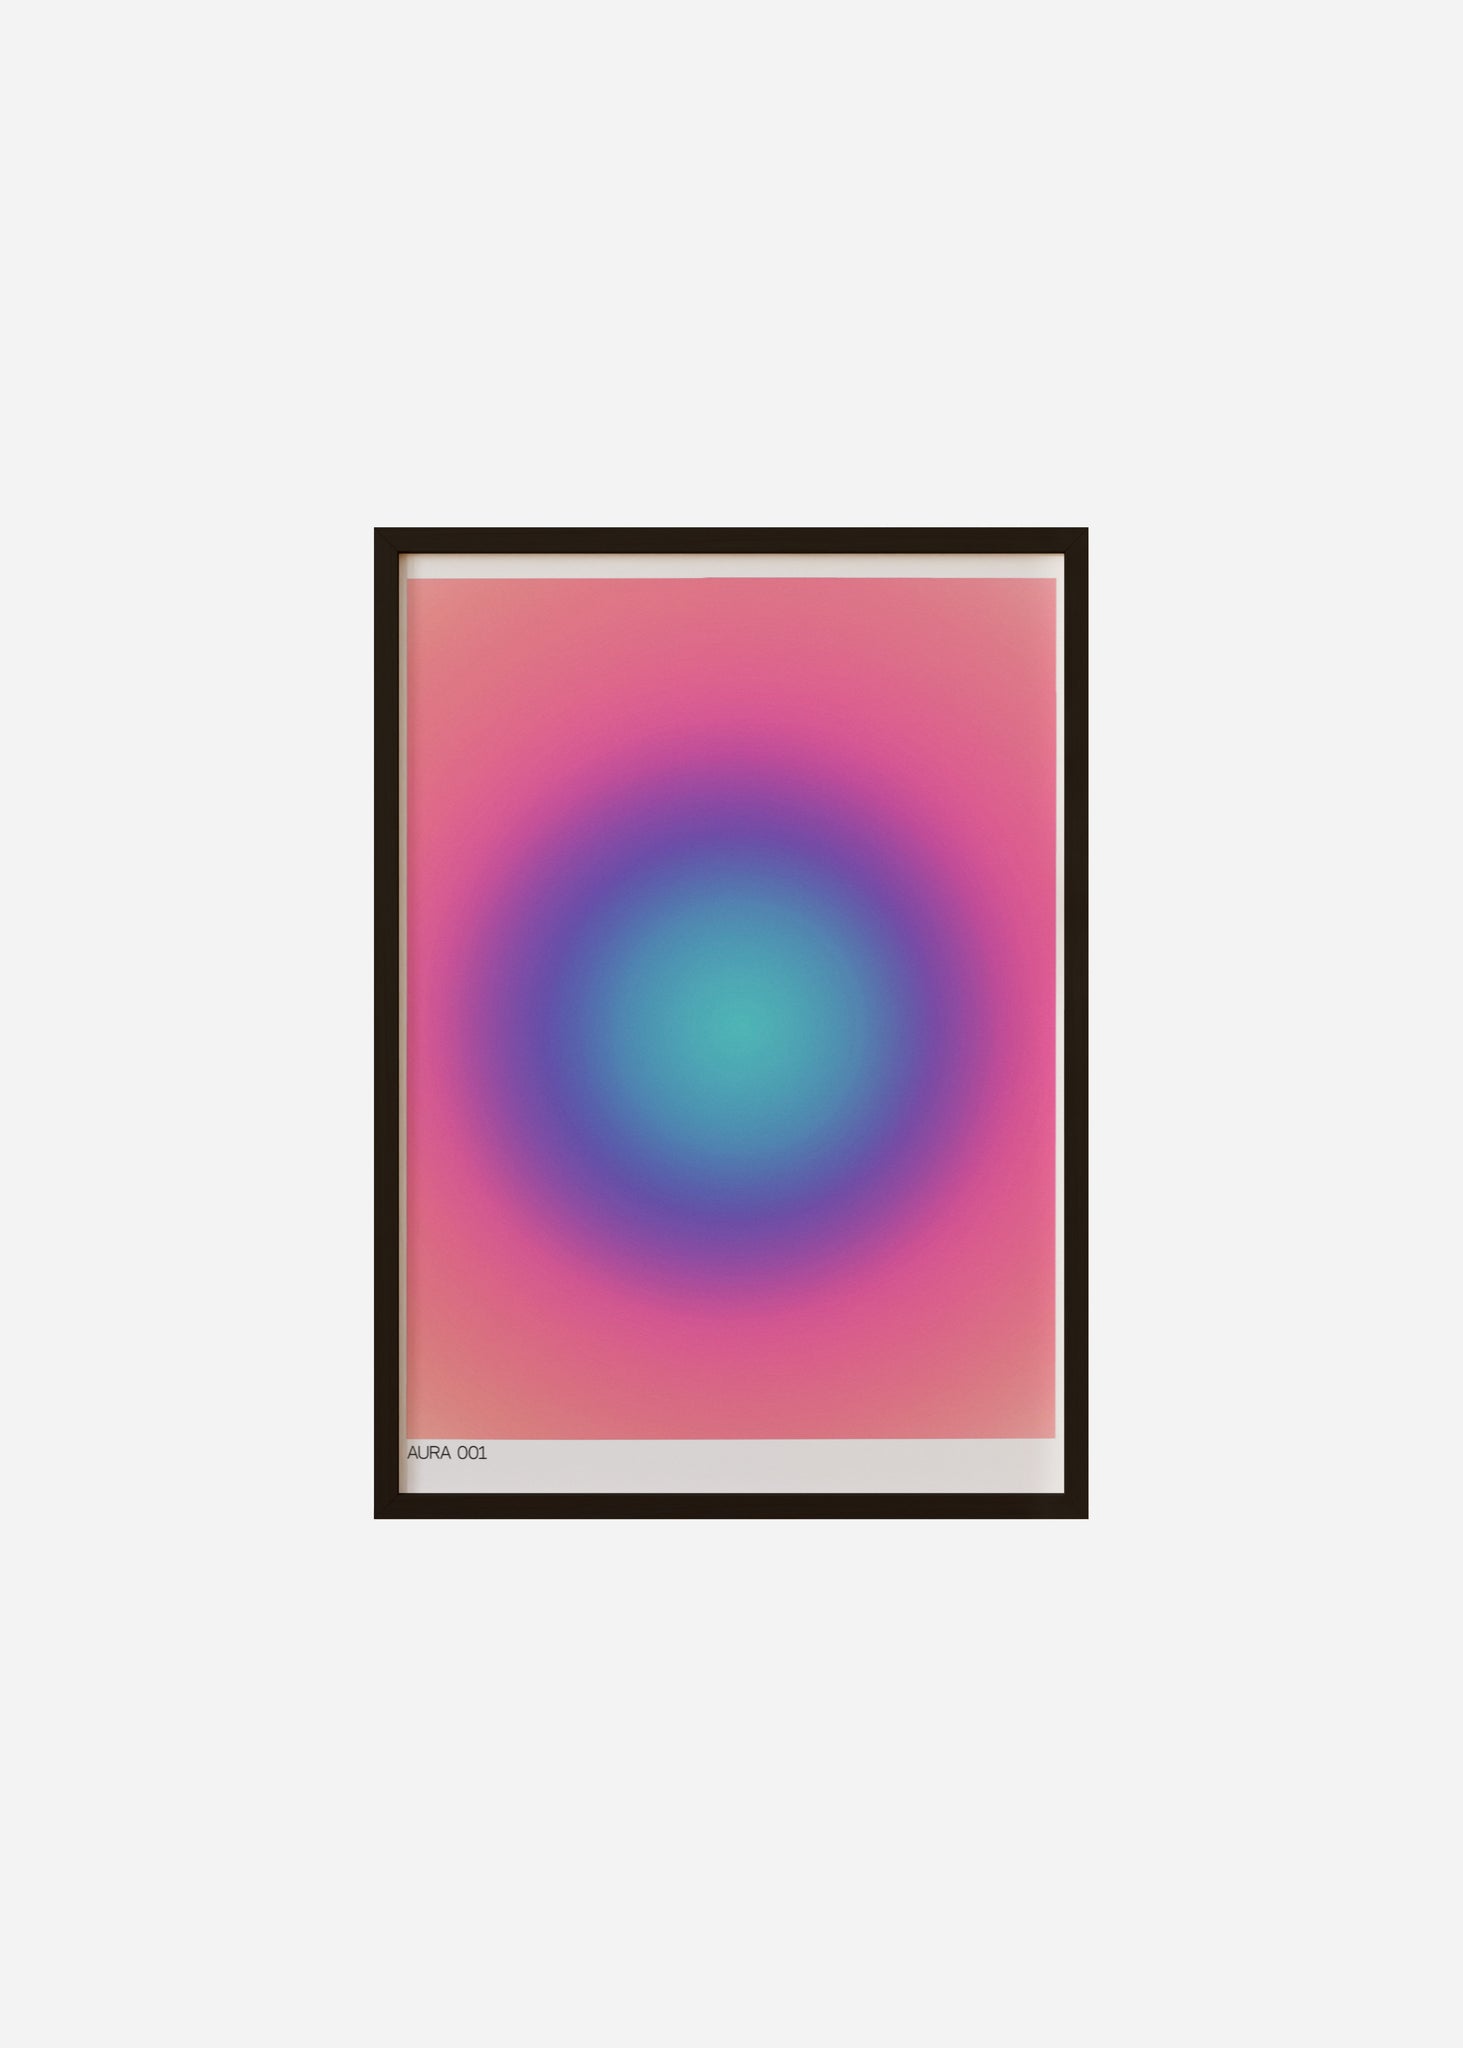 aura 001 Framed Print